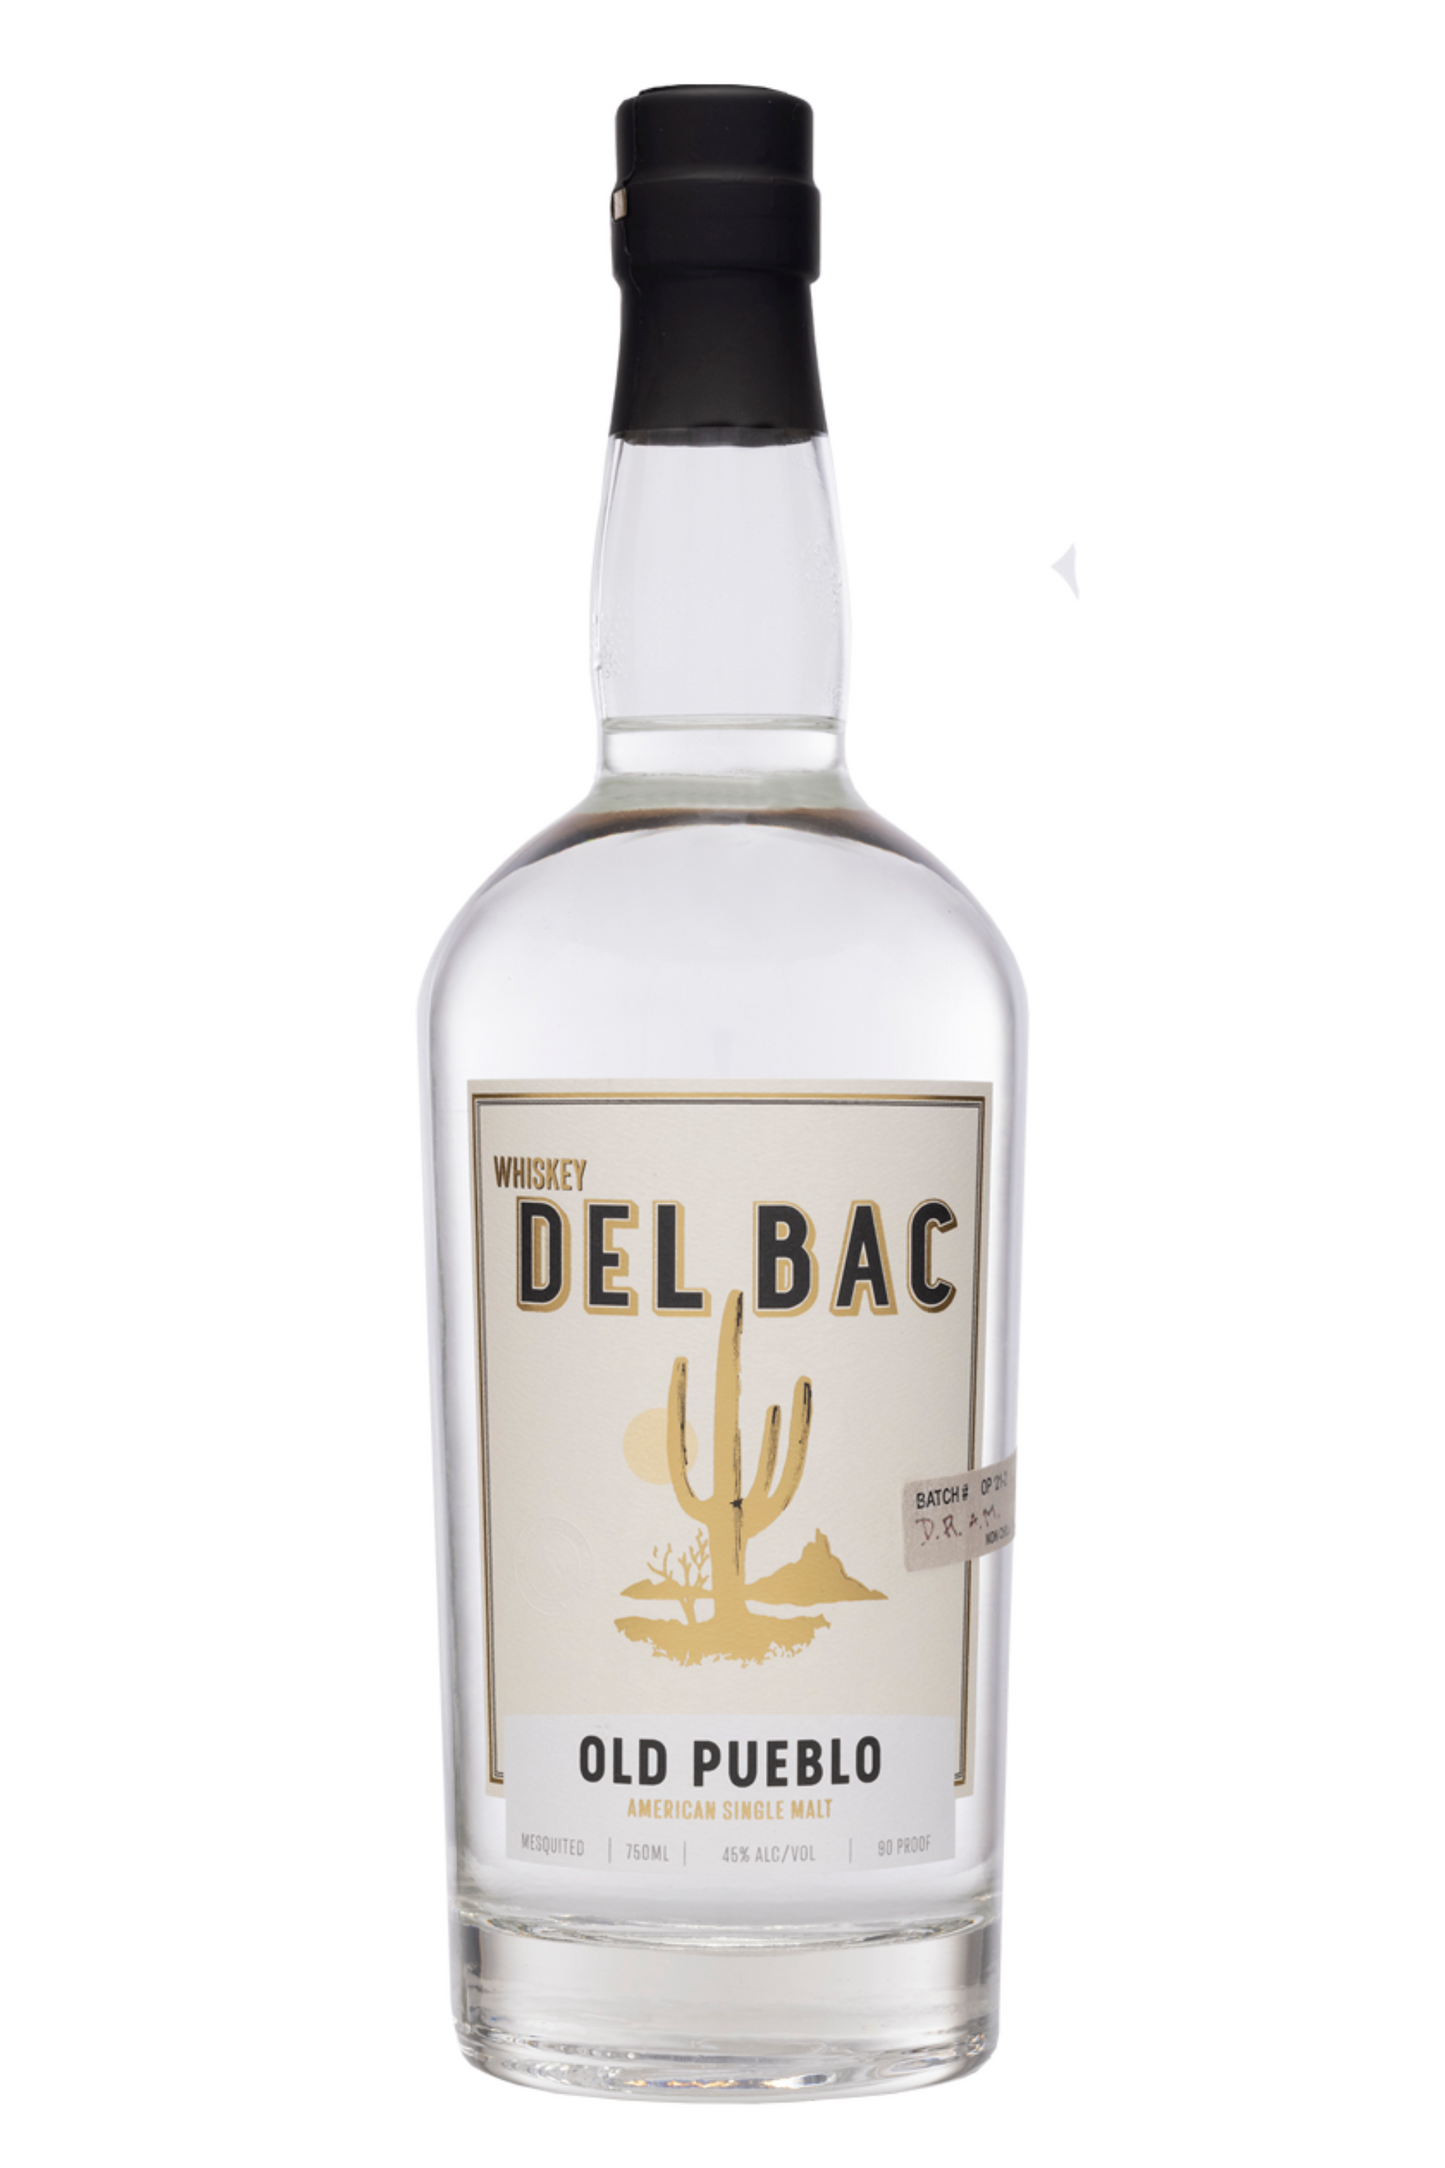 Old Pueblo is a white whiskey distilled in Tucson, Arizona.